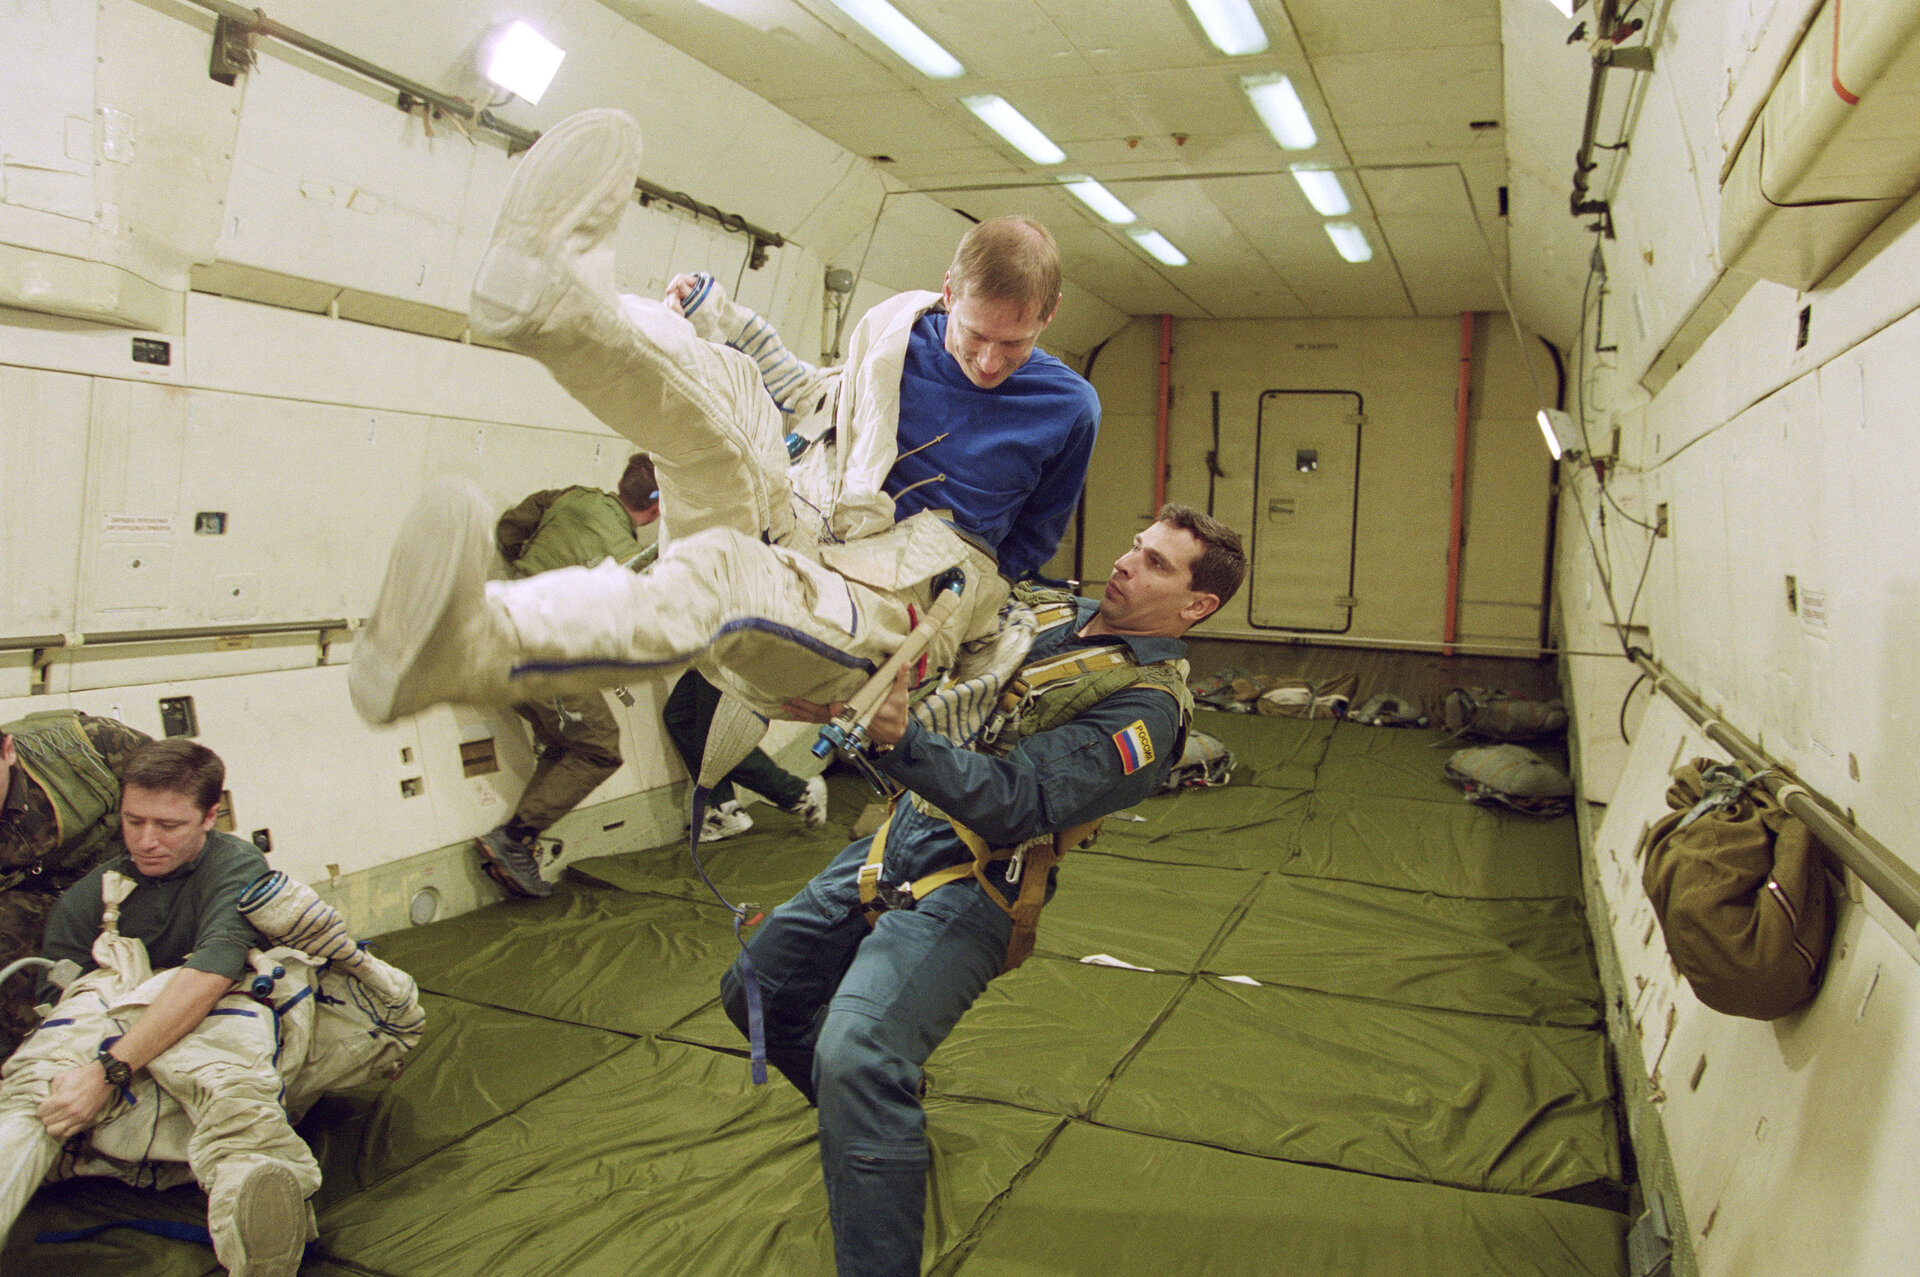 The European astronaut Frank De Winne during his Zero G flight